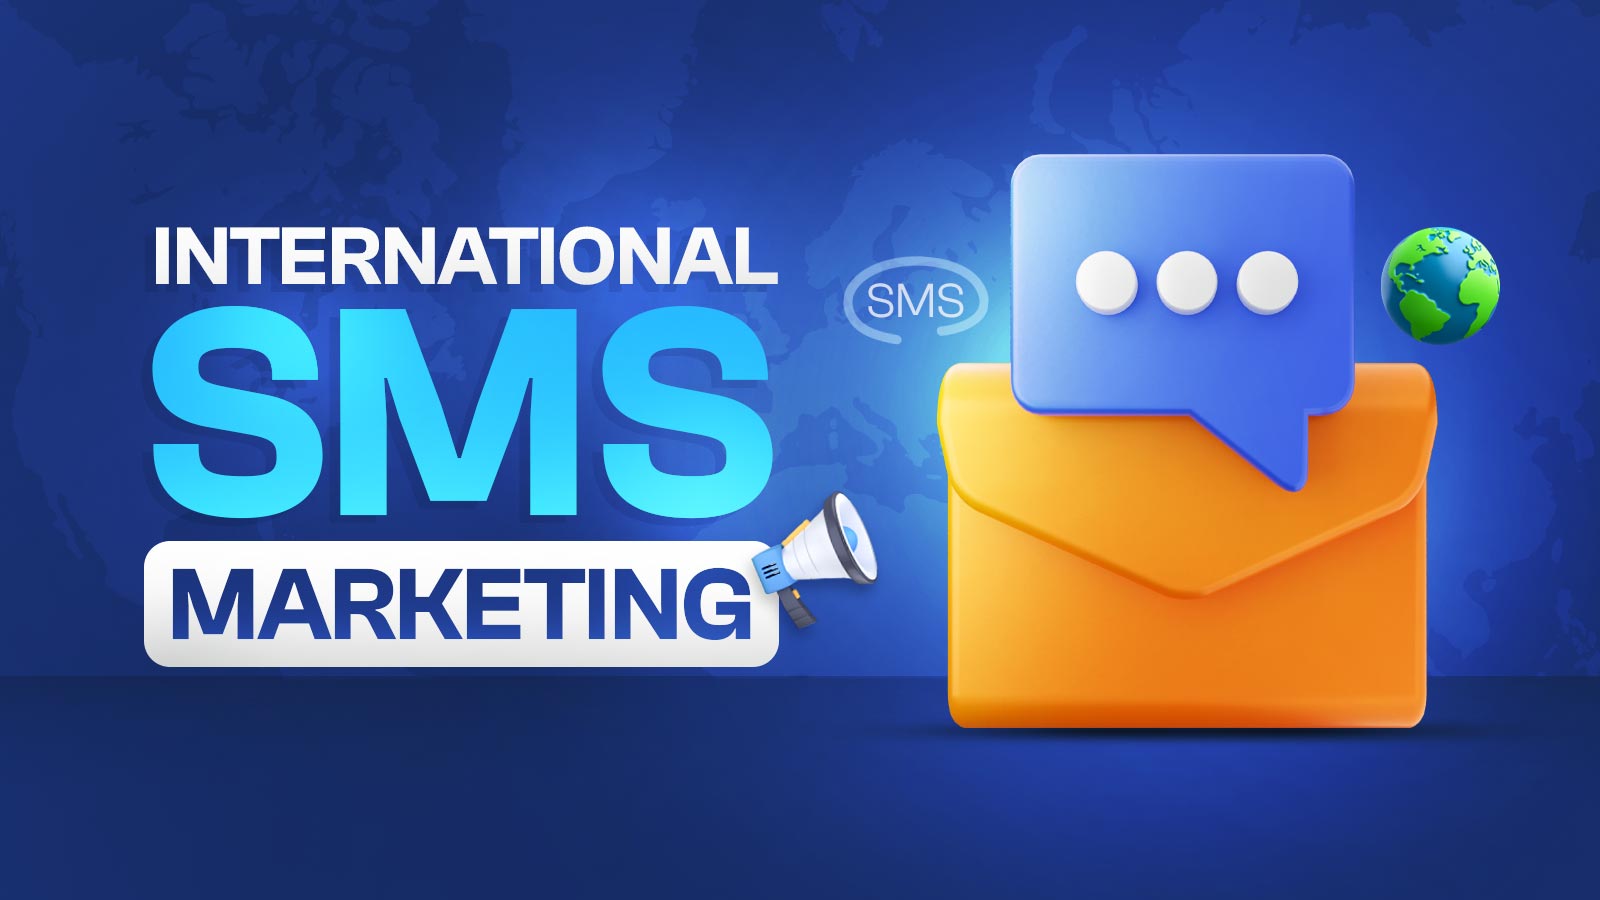 International SMS Marketing: Definition, Process, Benefits & More!